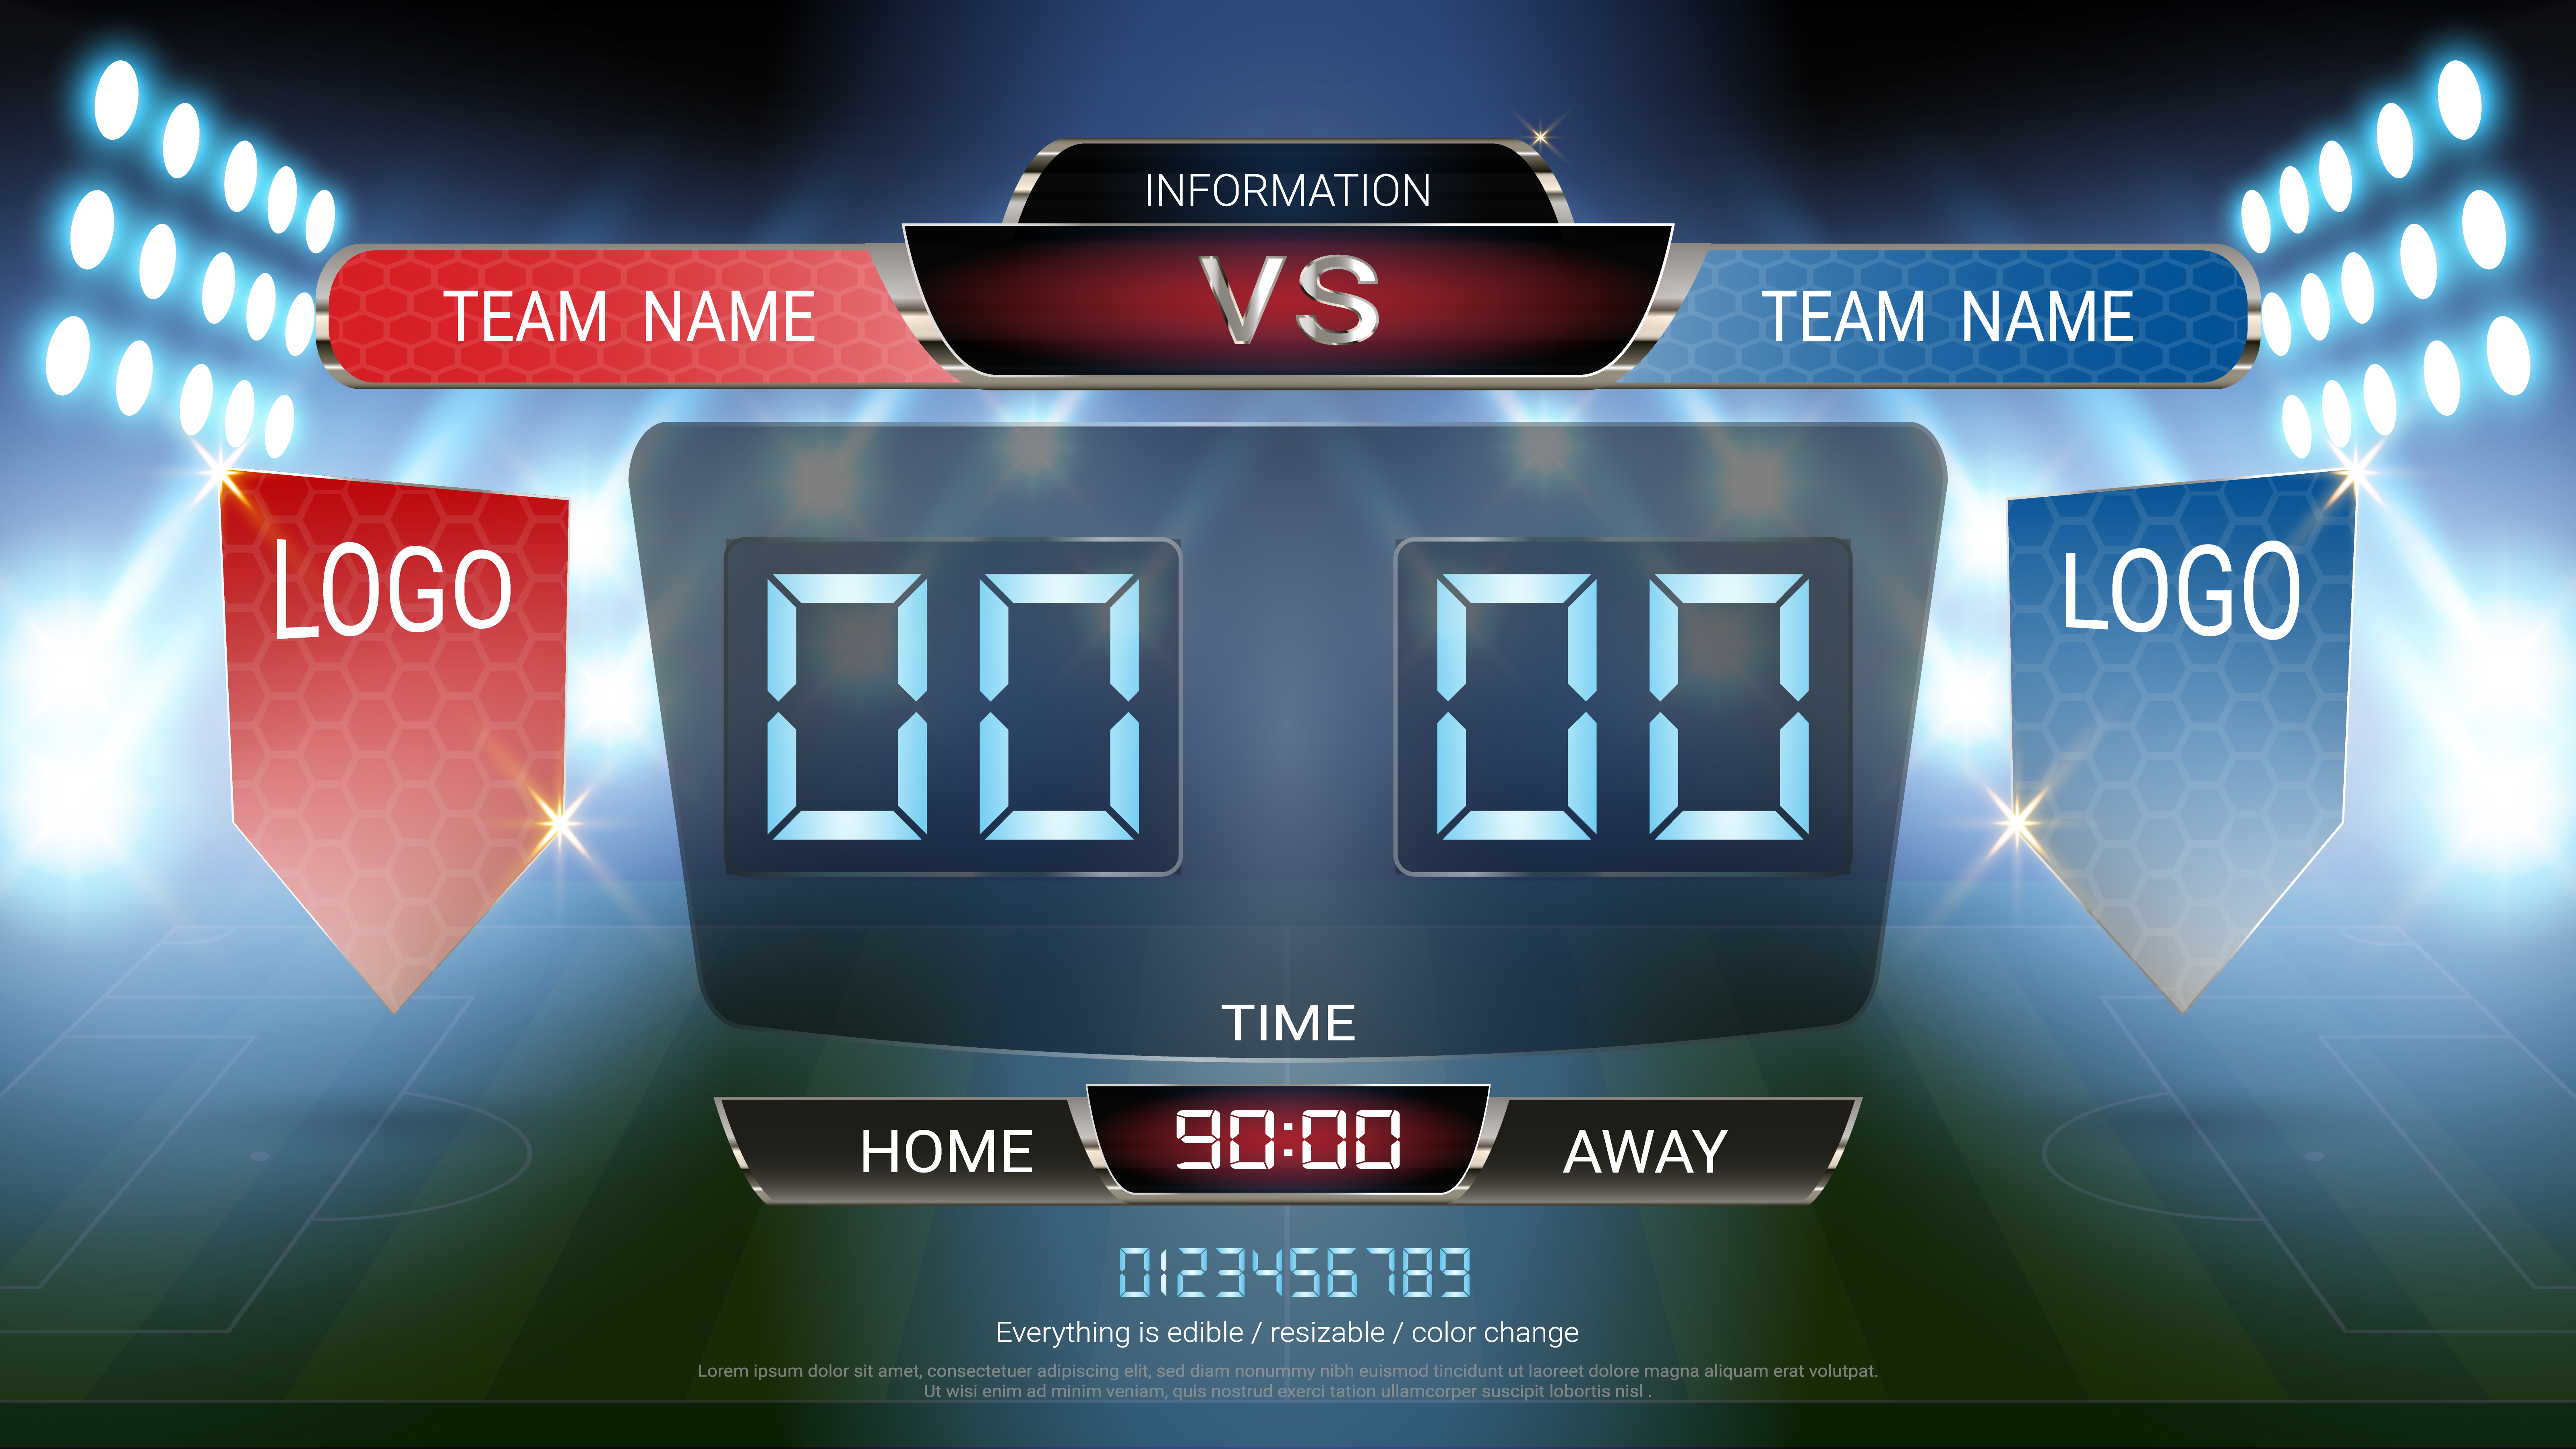 Digital timing scoreboard, Football match team A vs team B, Strategy